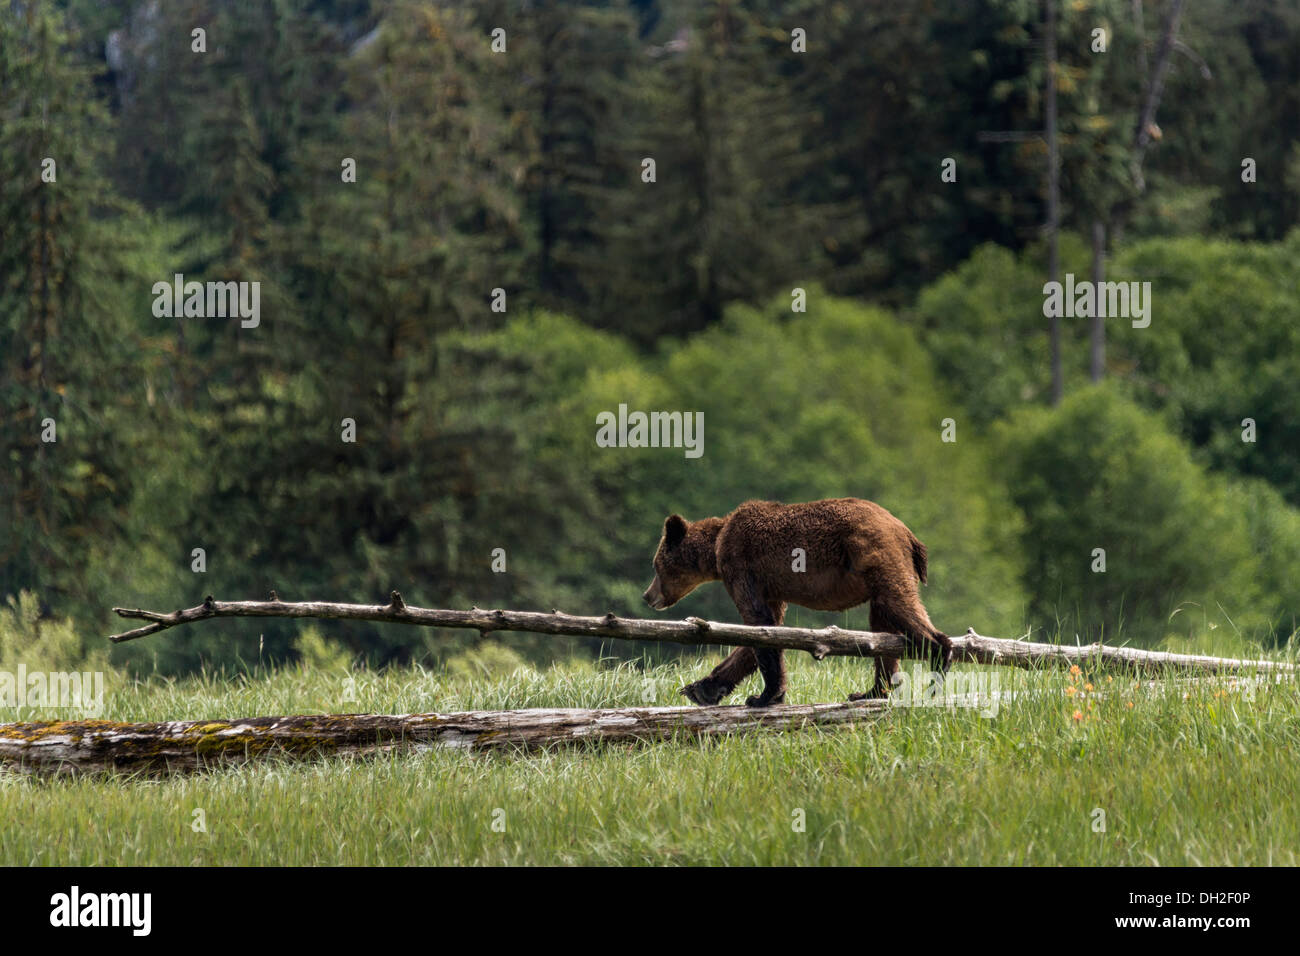 Junge grizzly Cub in Segge Rasen Wiese, Khutze Inlet, Mid Küste British Columbia Stockfoto